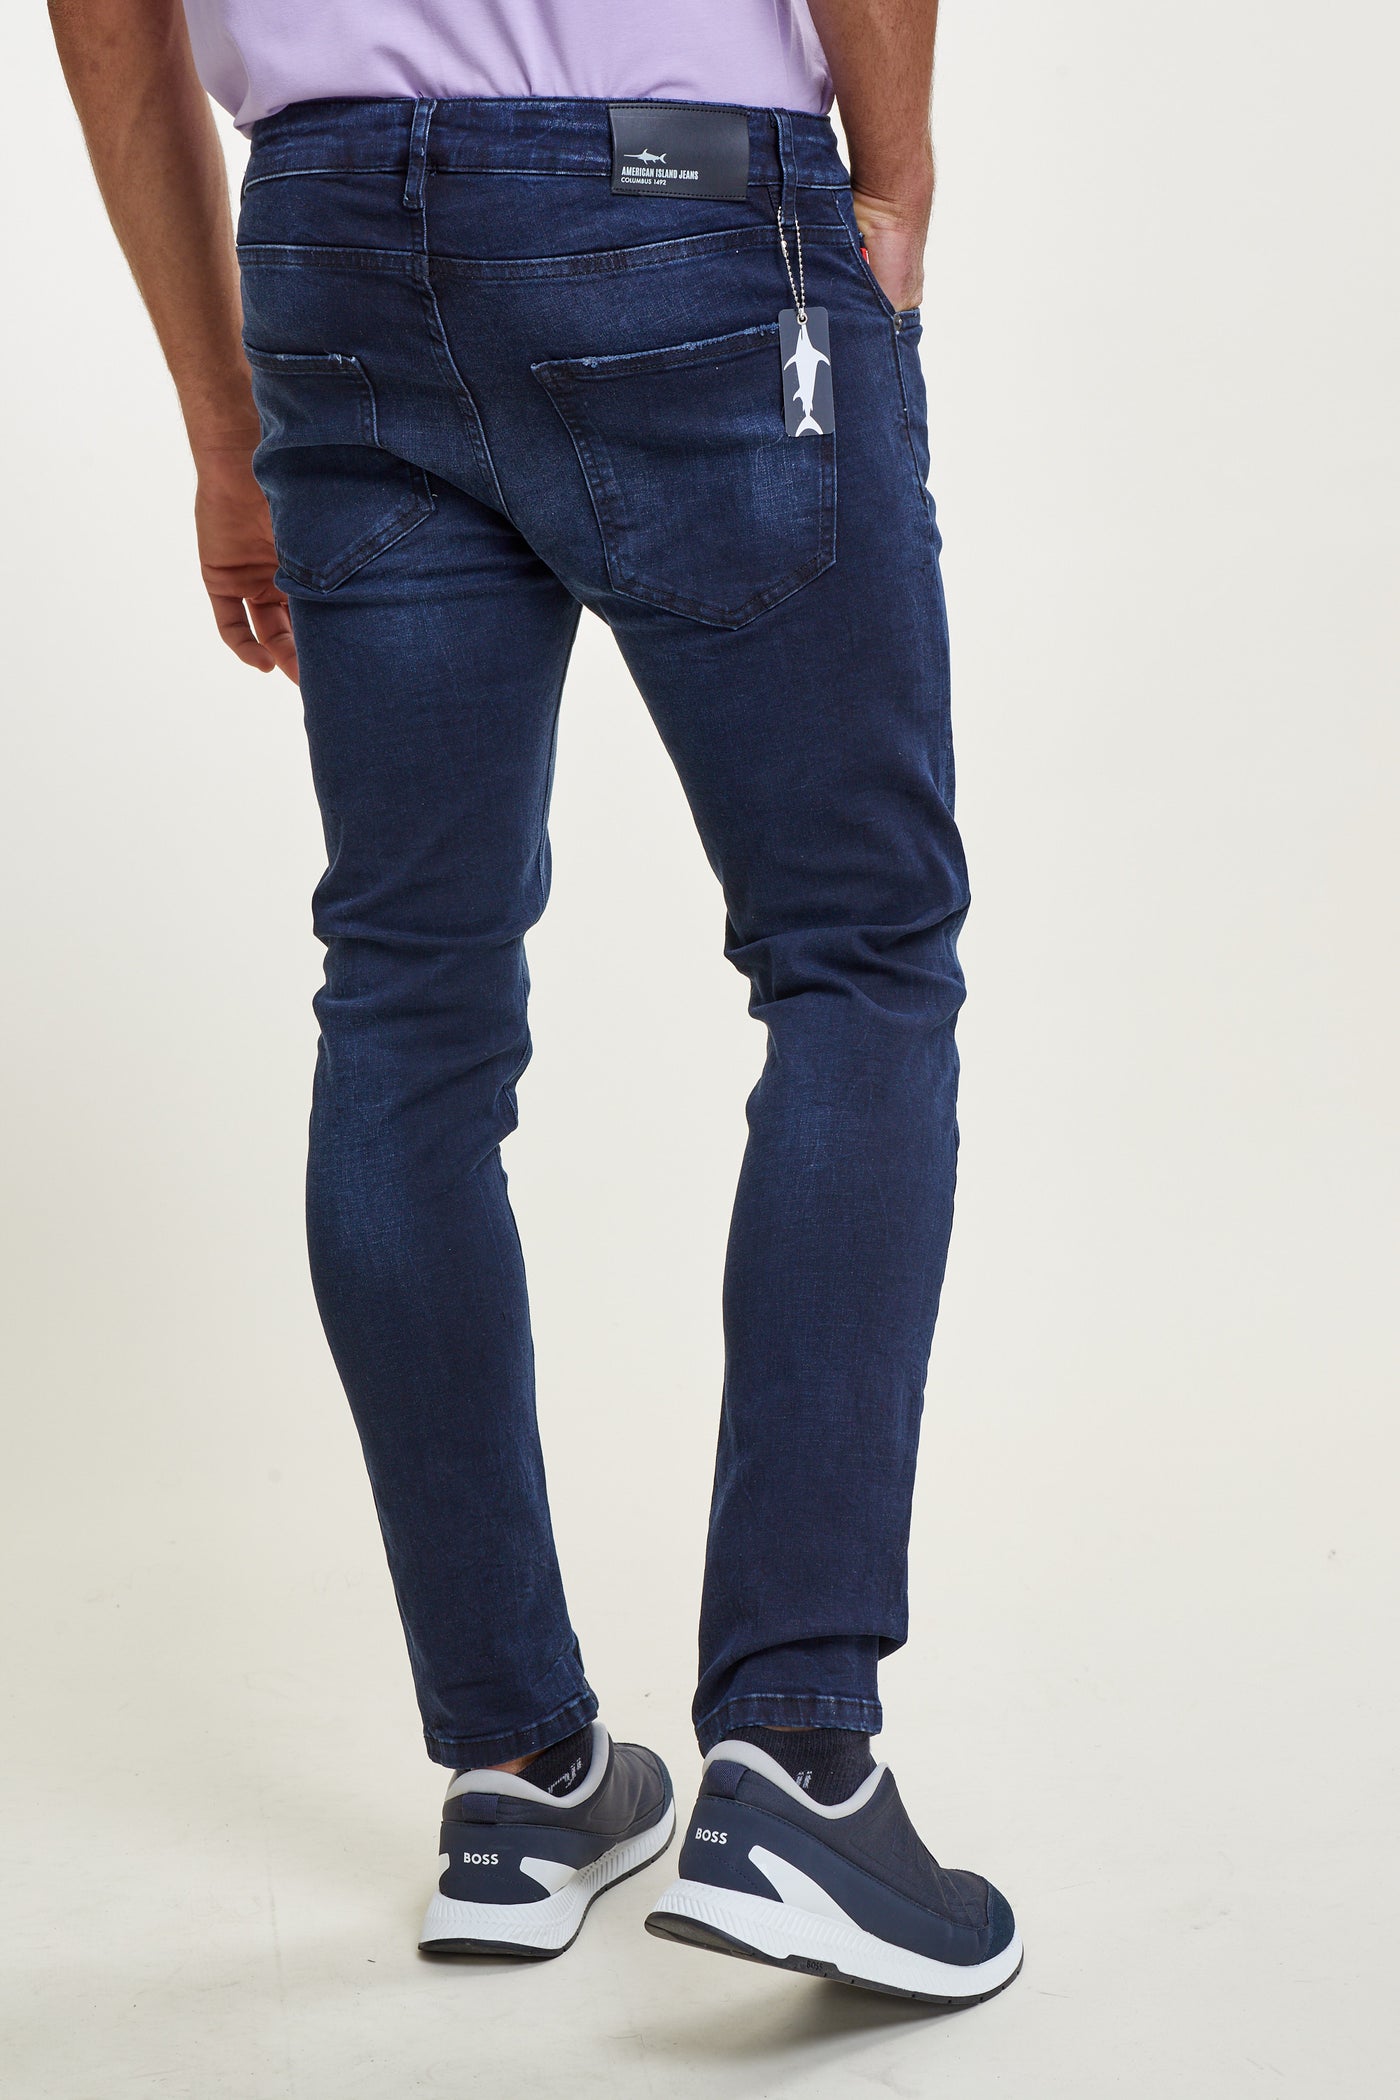 מכנס ג'ינס סלים 800 בצבע כחול 23